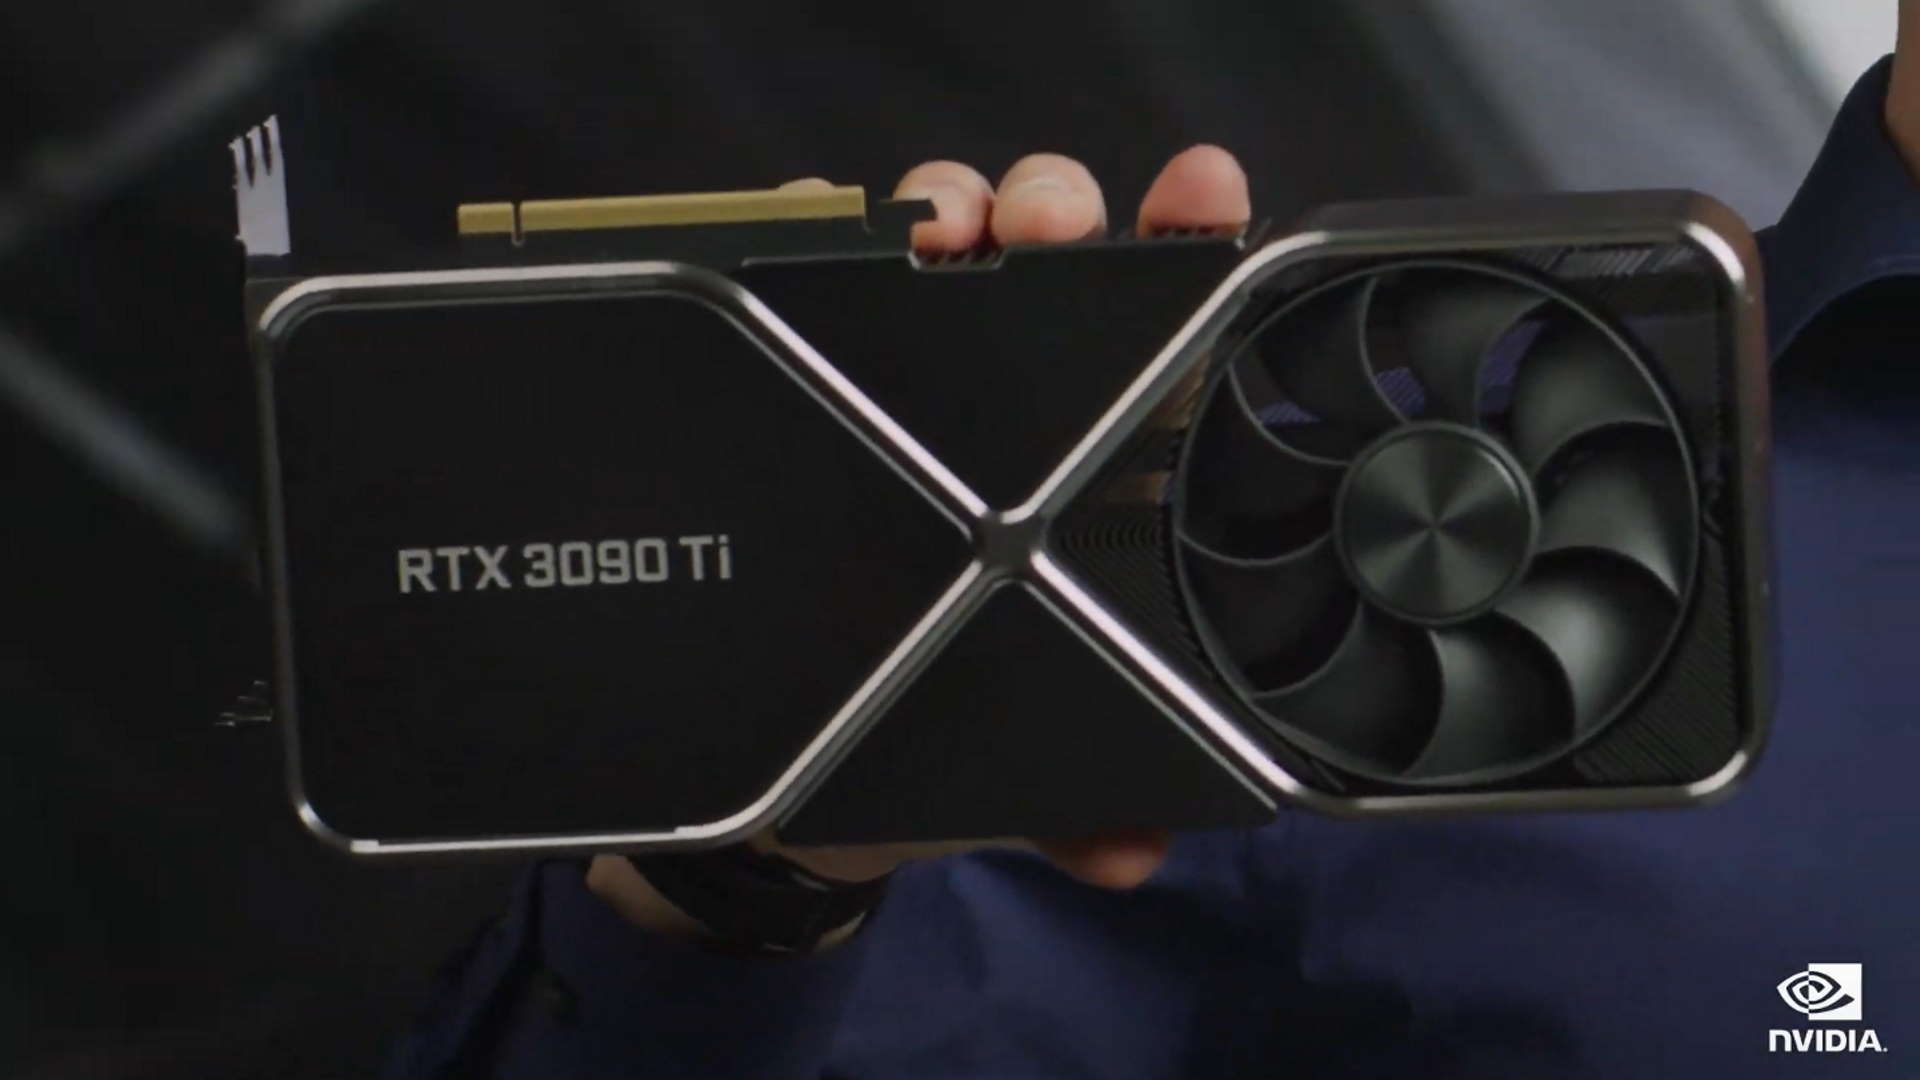  Nvidia has announced the RTX 3090 Ti, 'a monster of a GPU' 